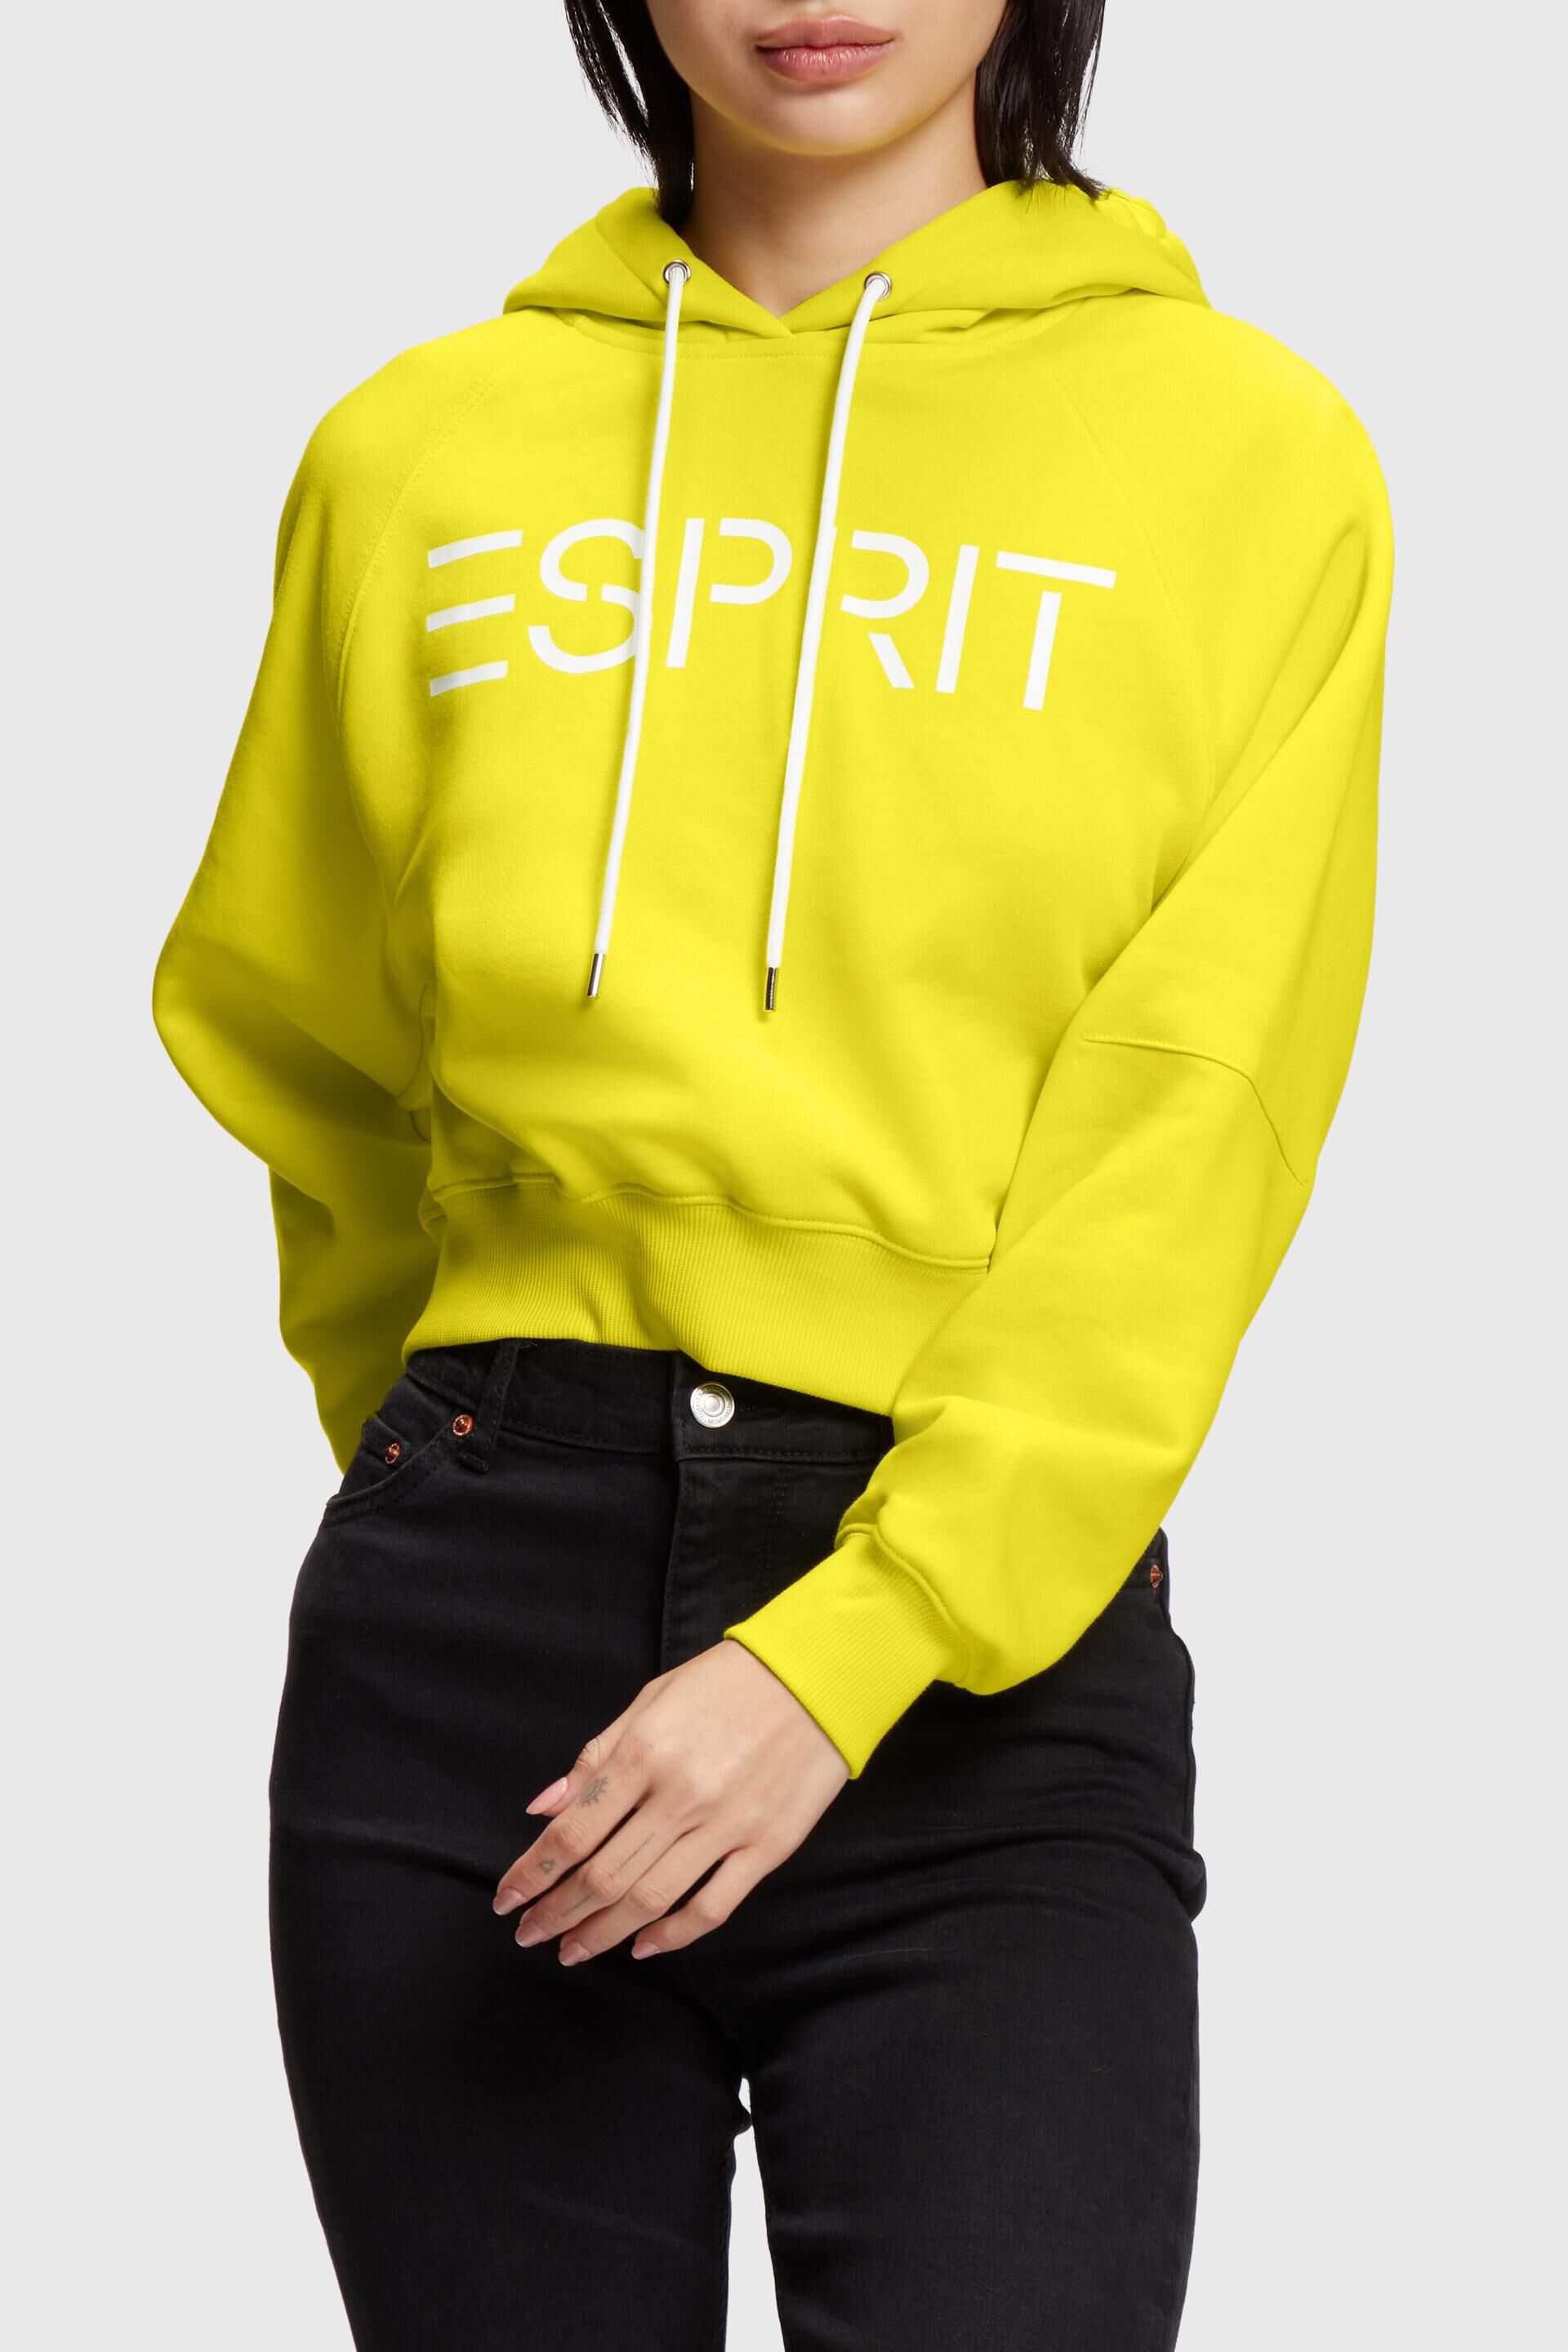 Esprit Damen Cropped logo hoodie